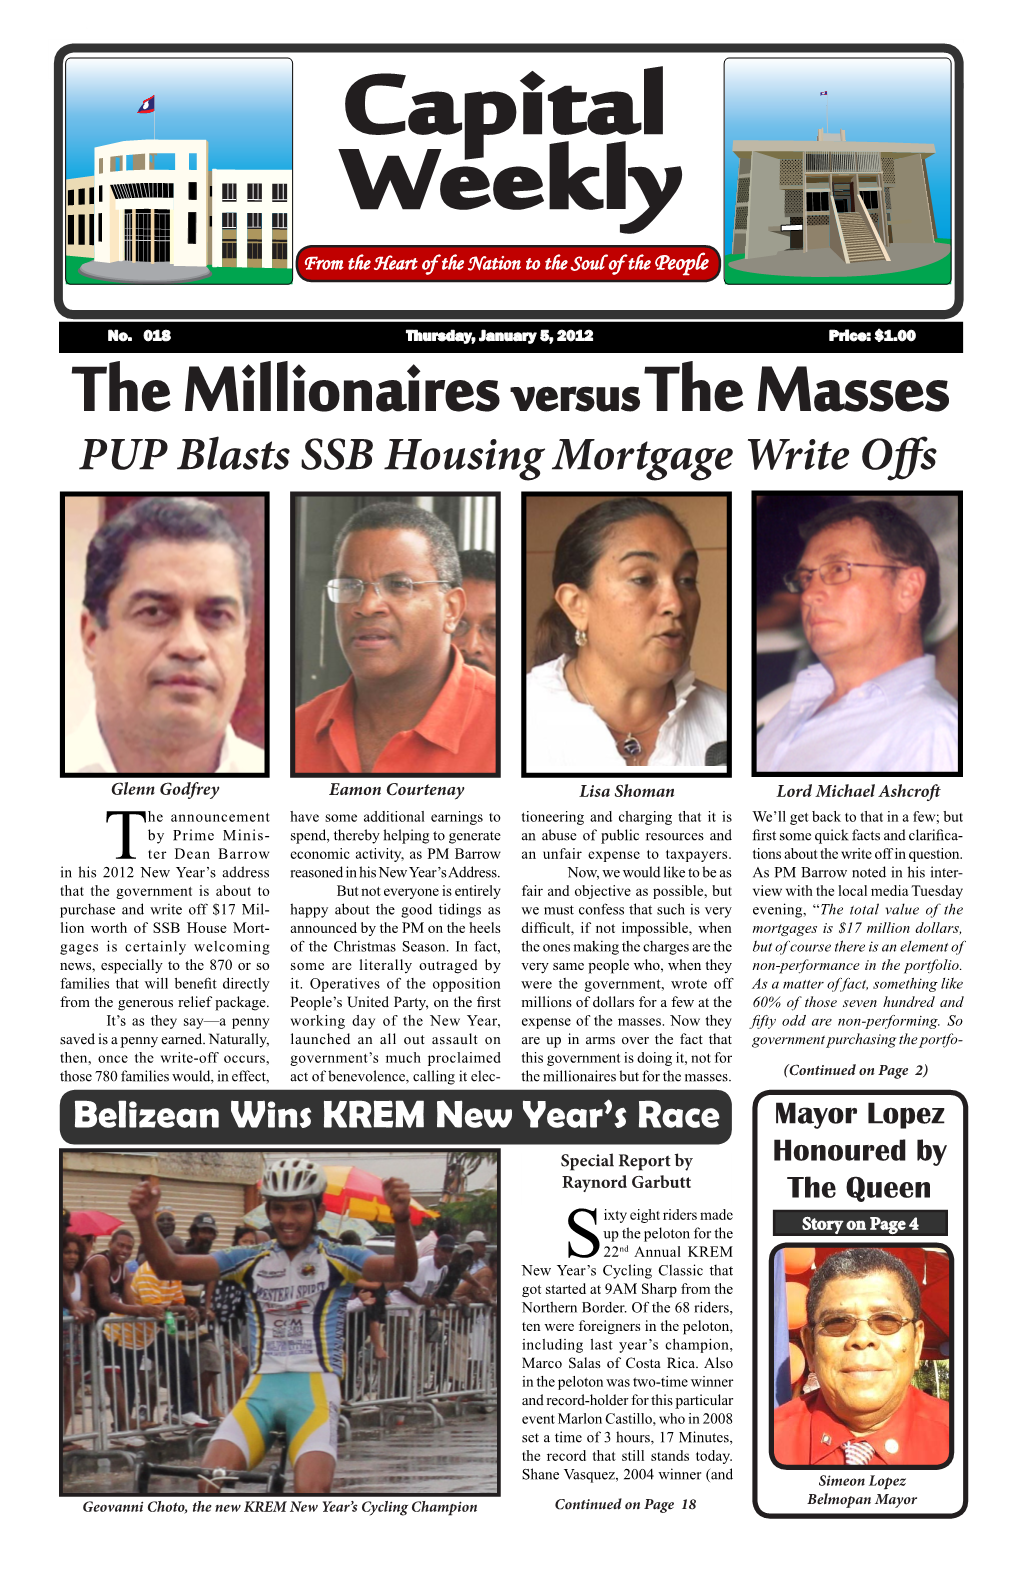 PUP Blasts SSB Housing Mortgage Write Offs